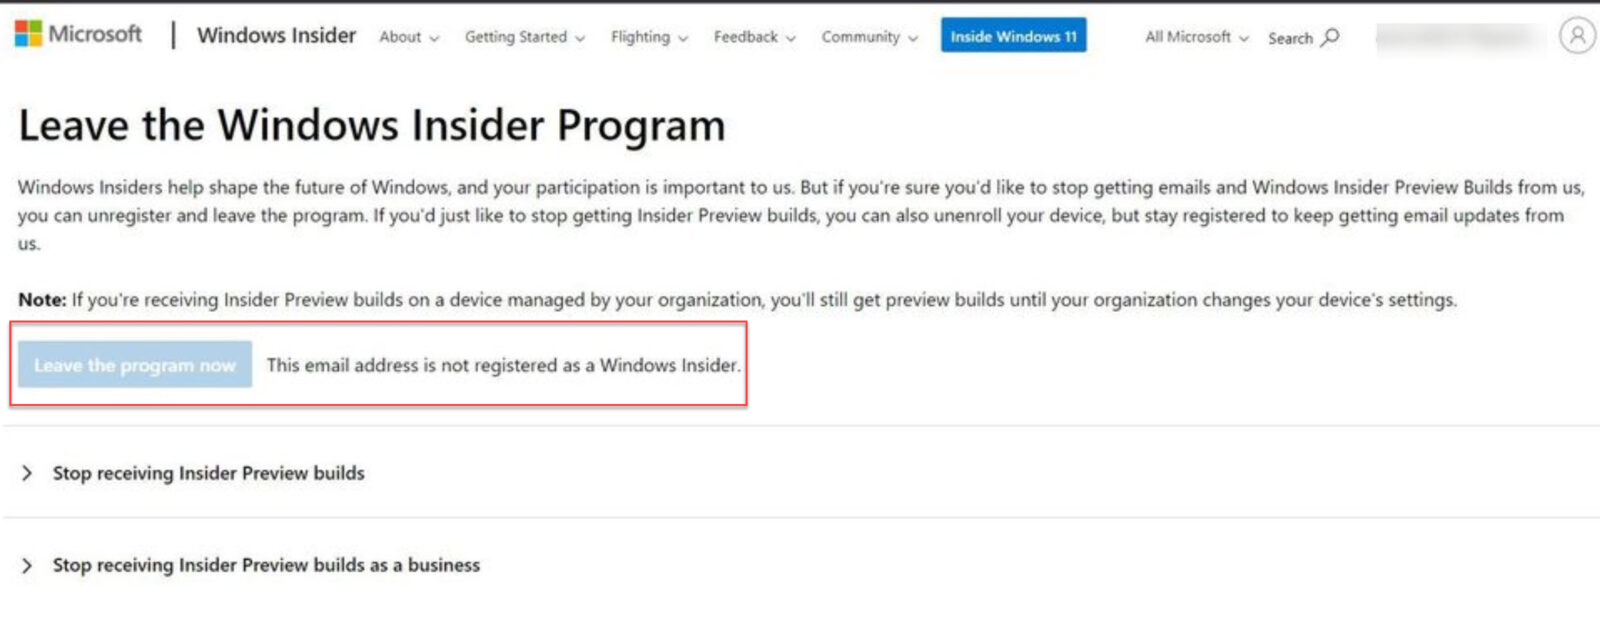 Can't leave Windows Insider Program